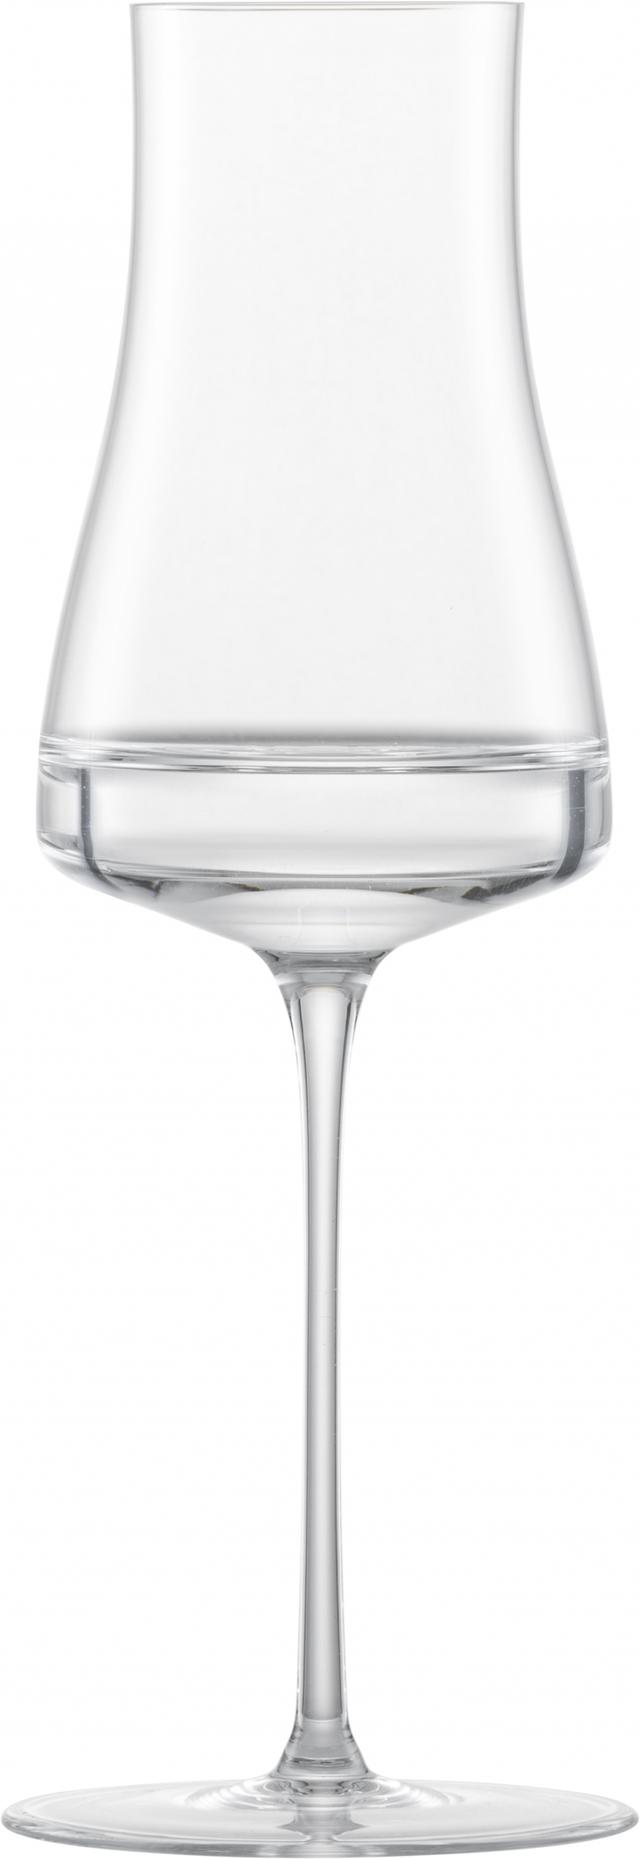 zwiesel glas wine classics select grappaglas 155 - 0.285 ltr